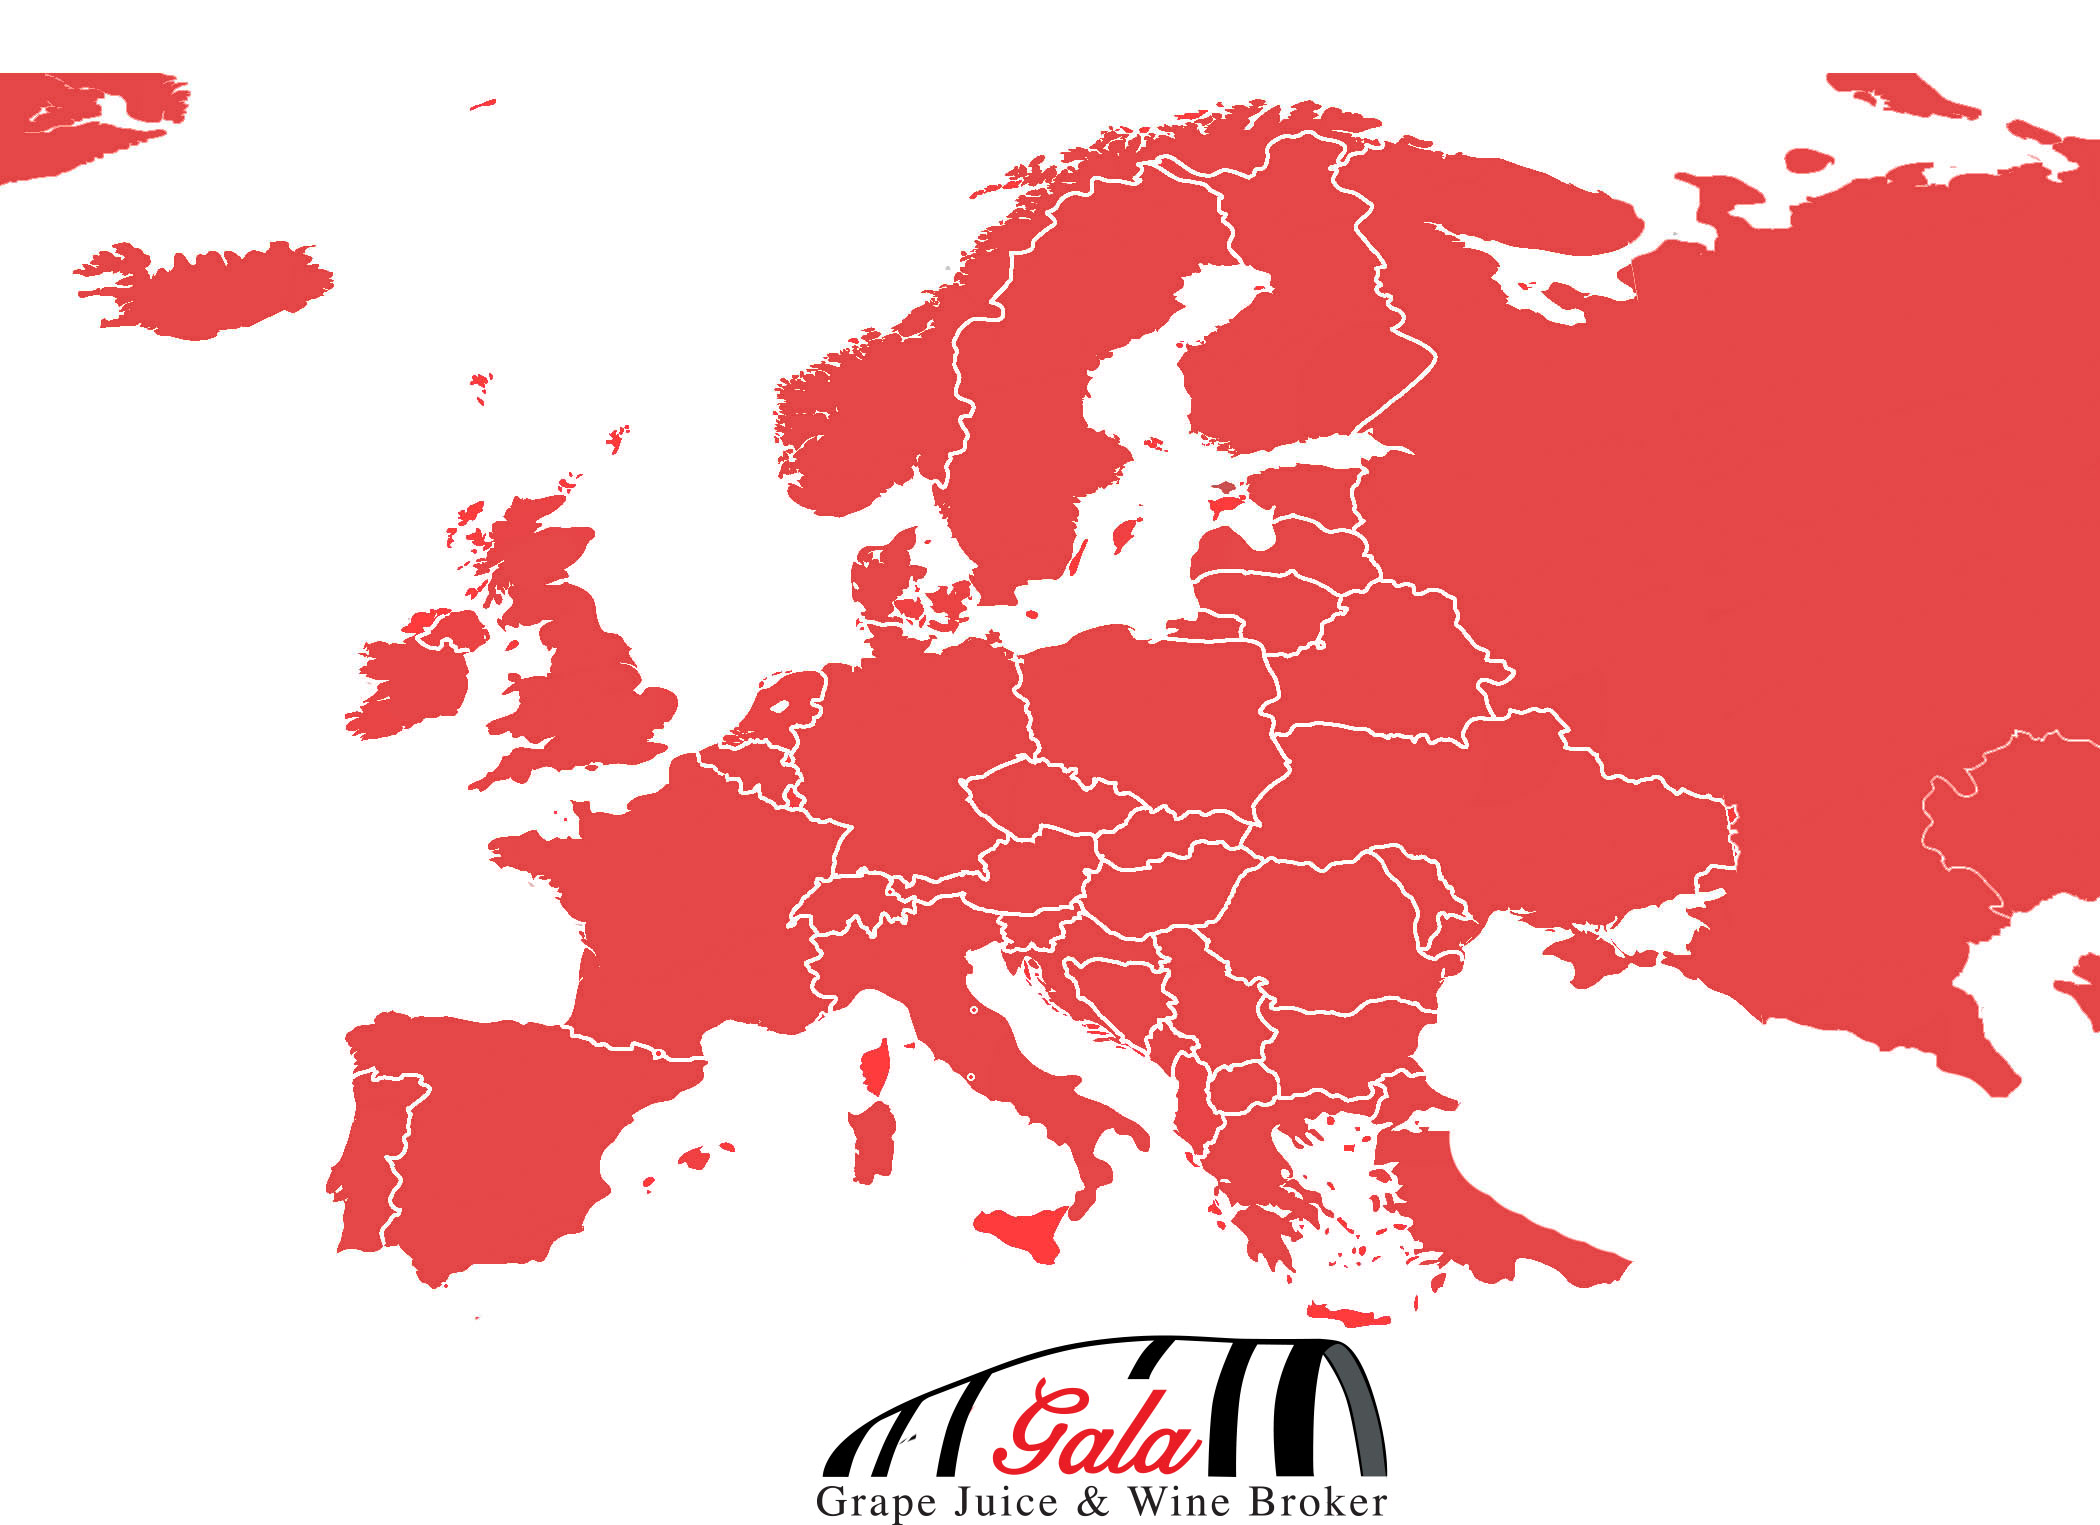 mapa extension europa gala2